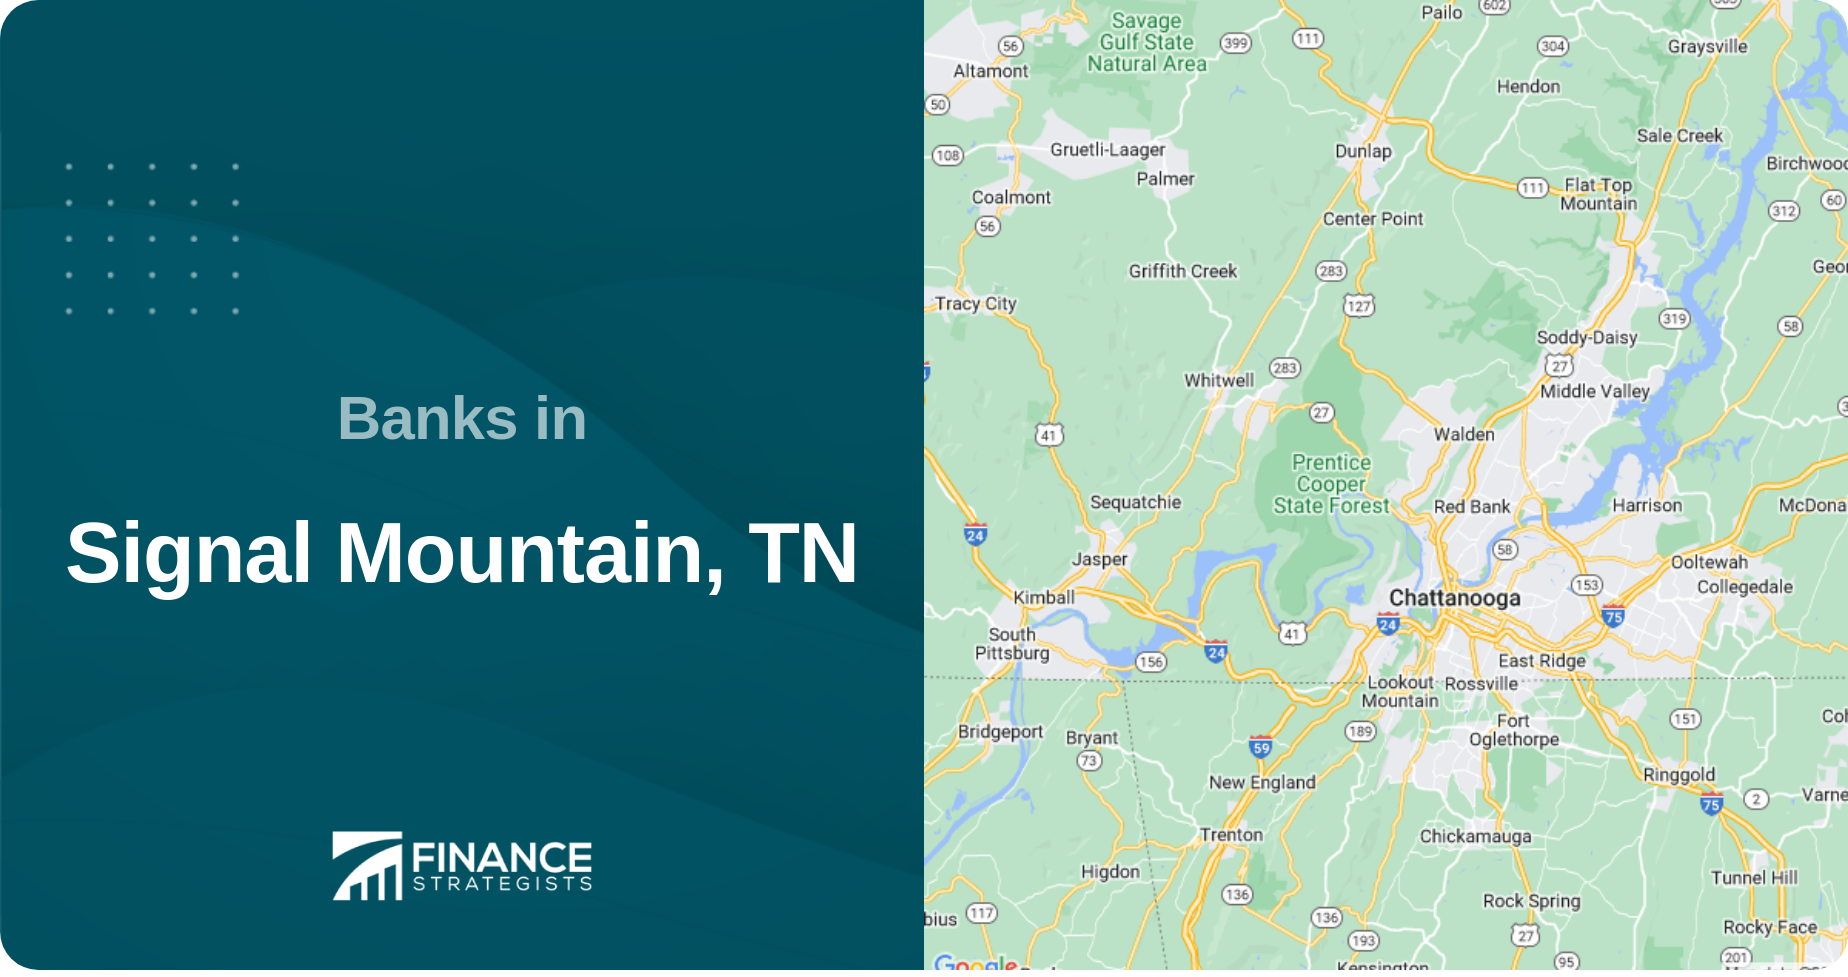 Banks in Signal Mountain, TN